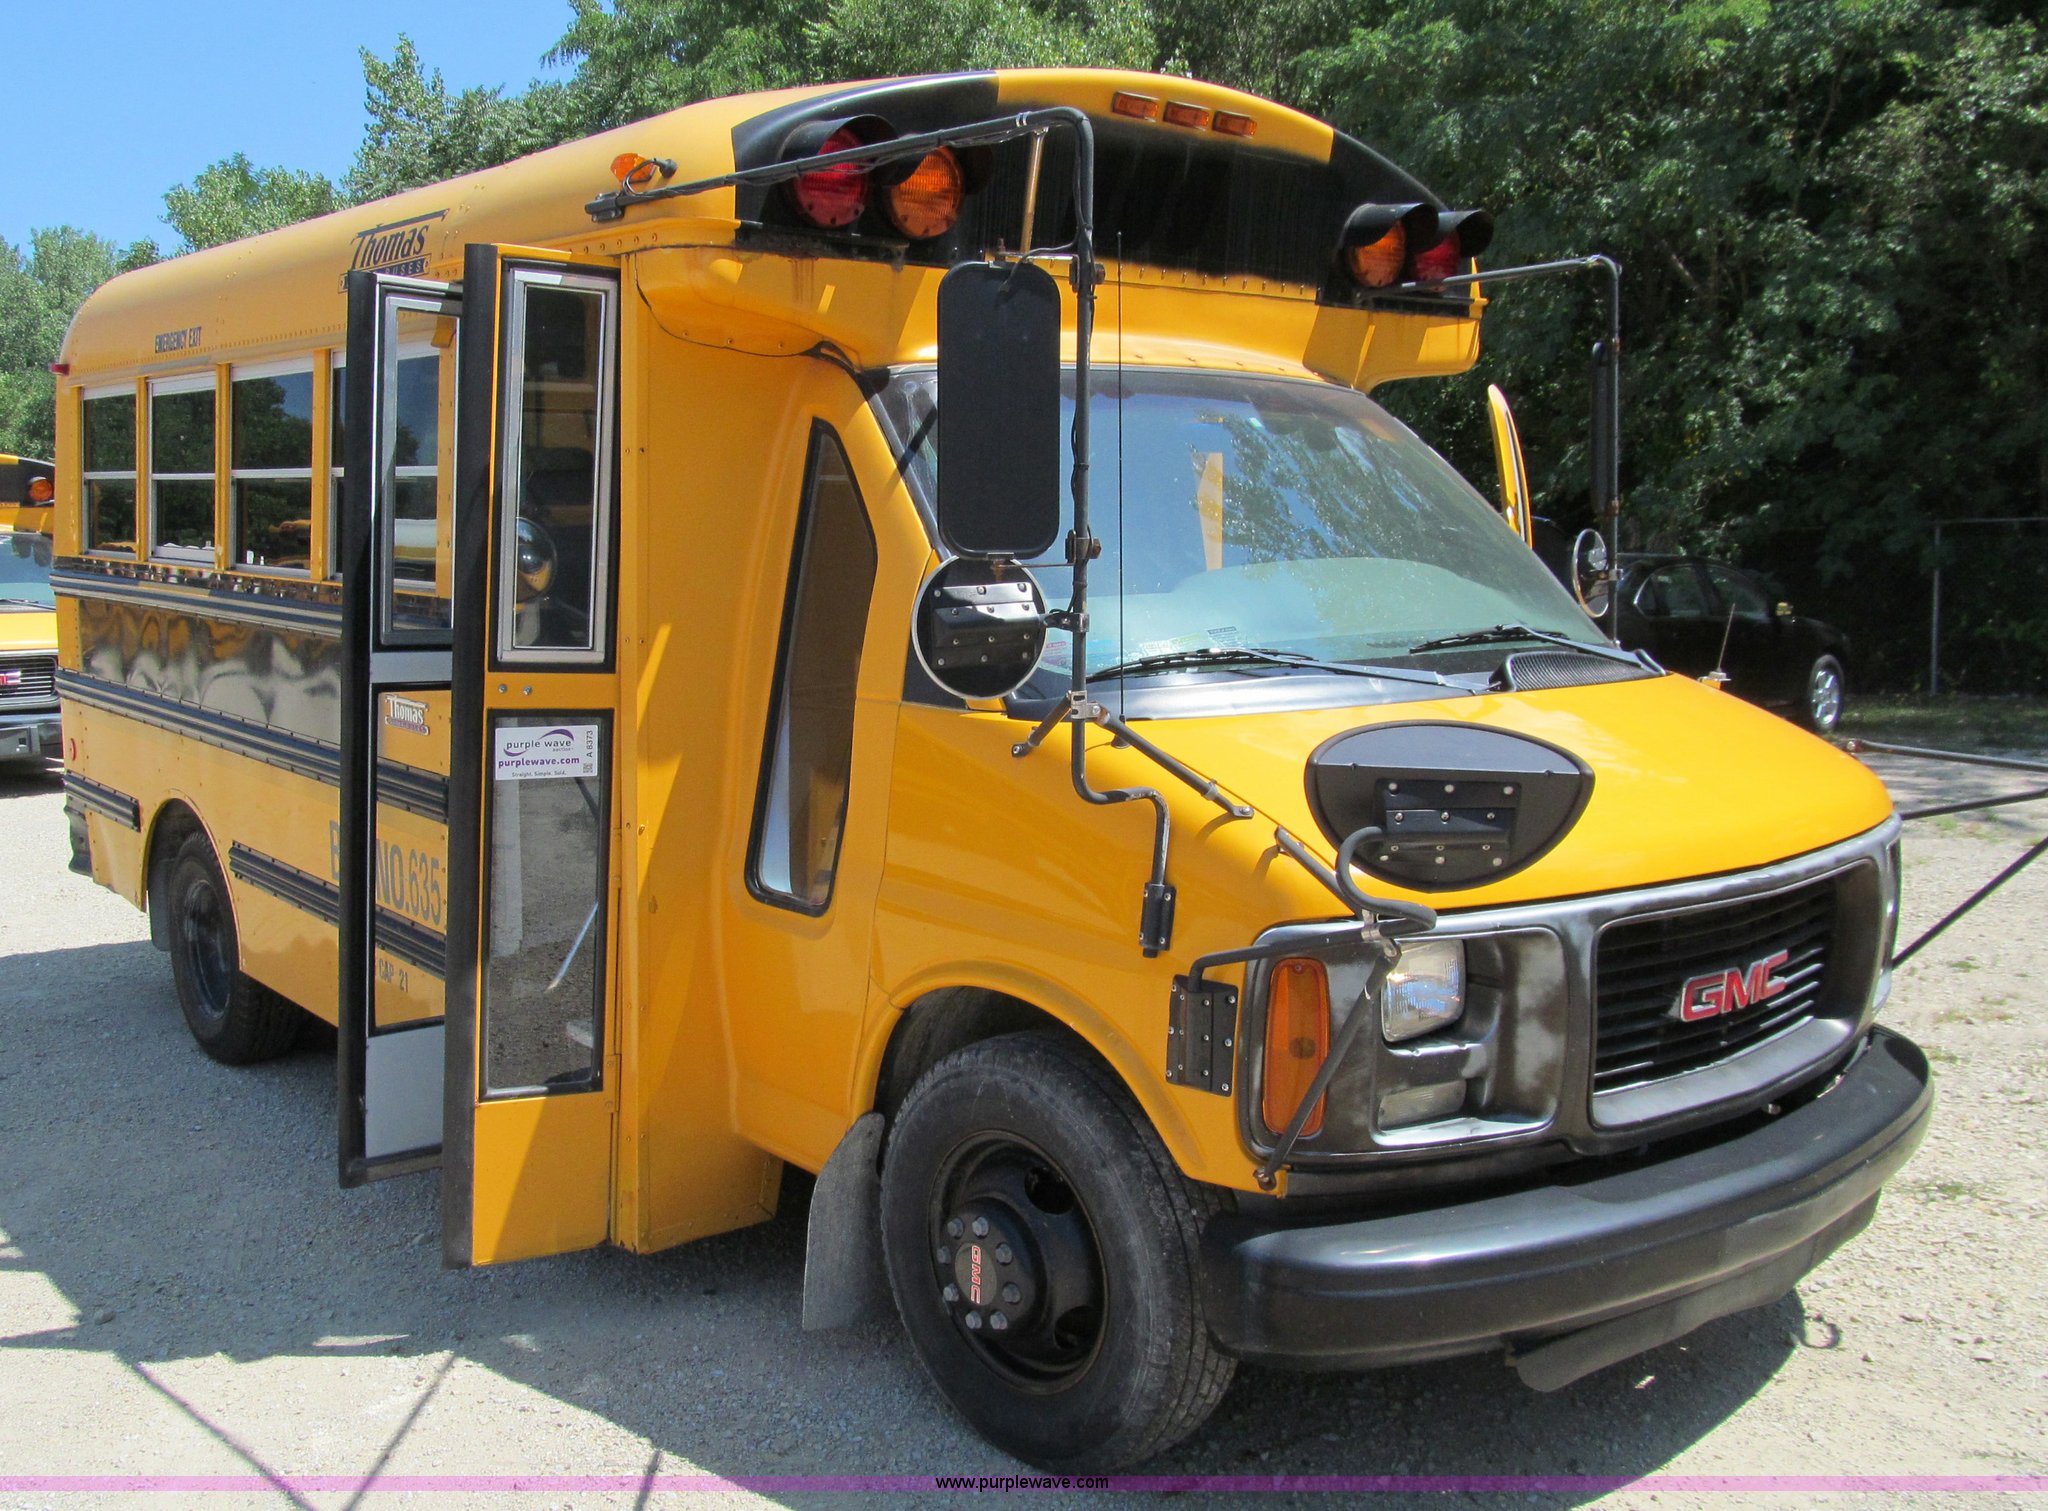 2000 GMC Savana 3500 school bus in Des Moines, IA | Item A8373 sold |  Purple Wave